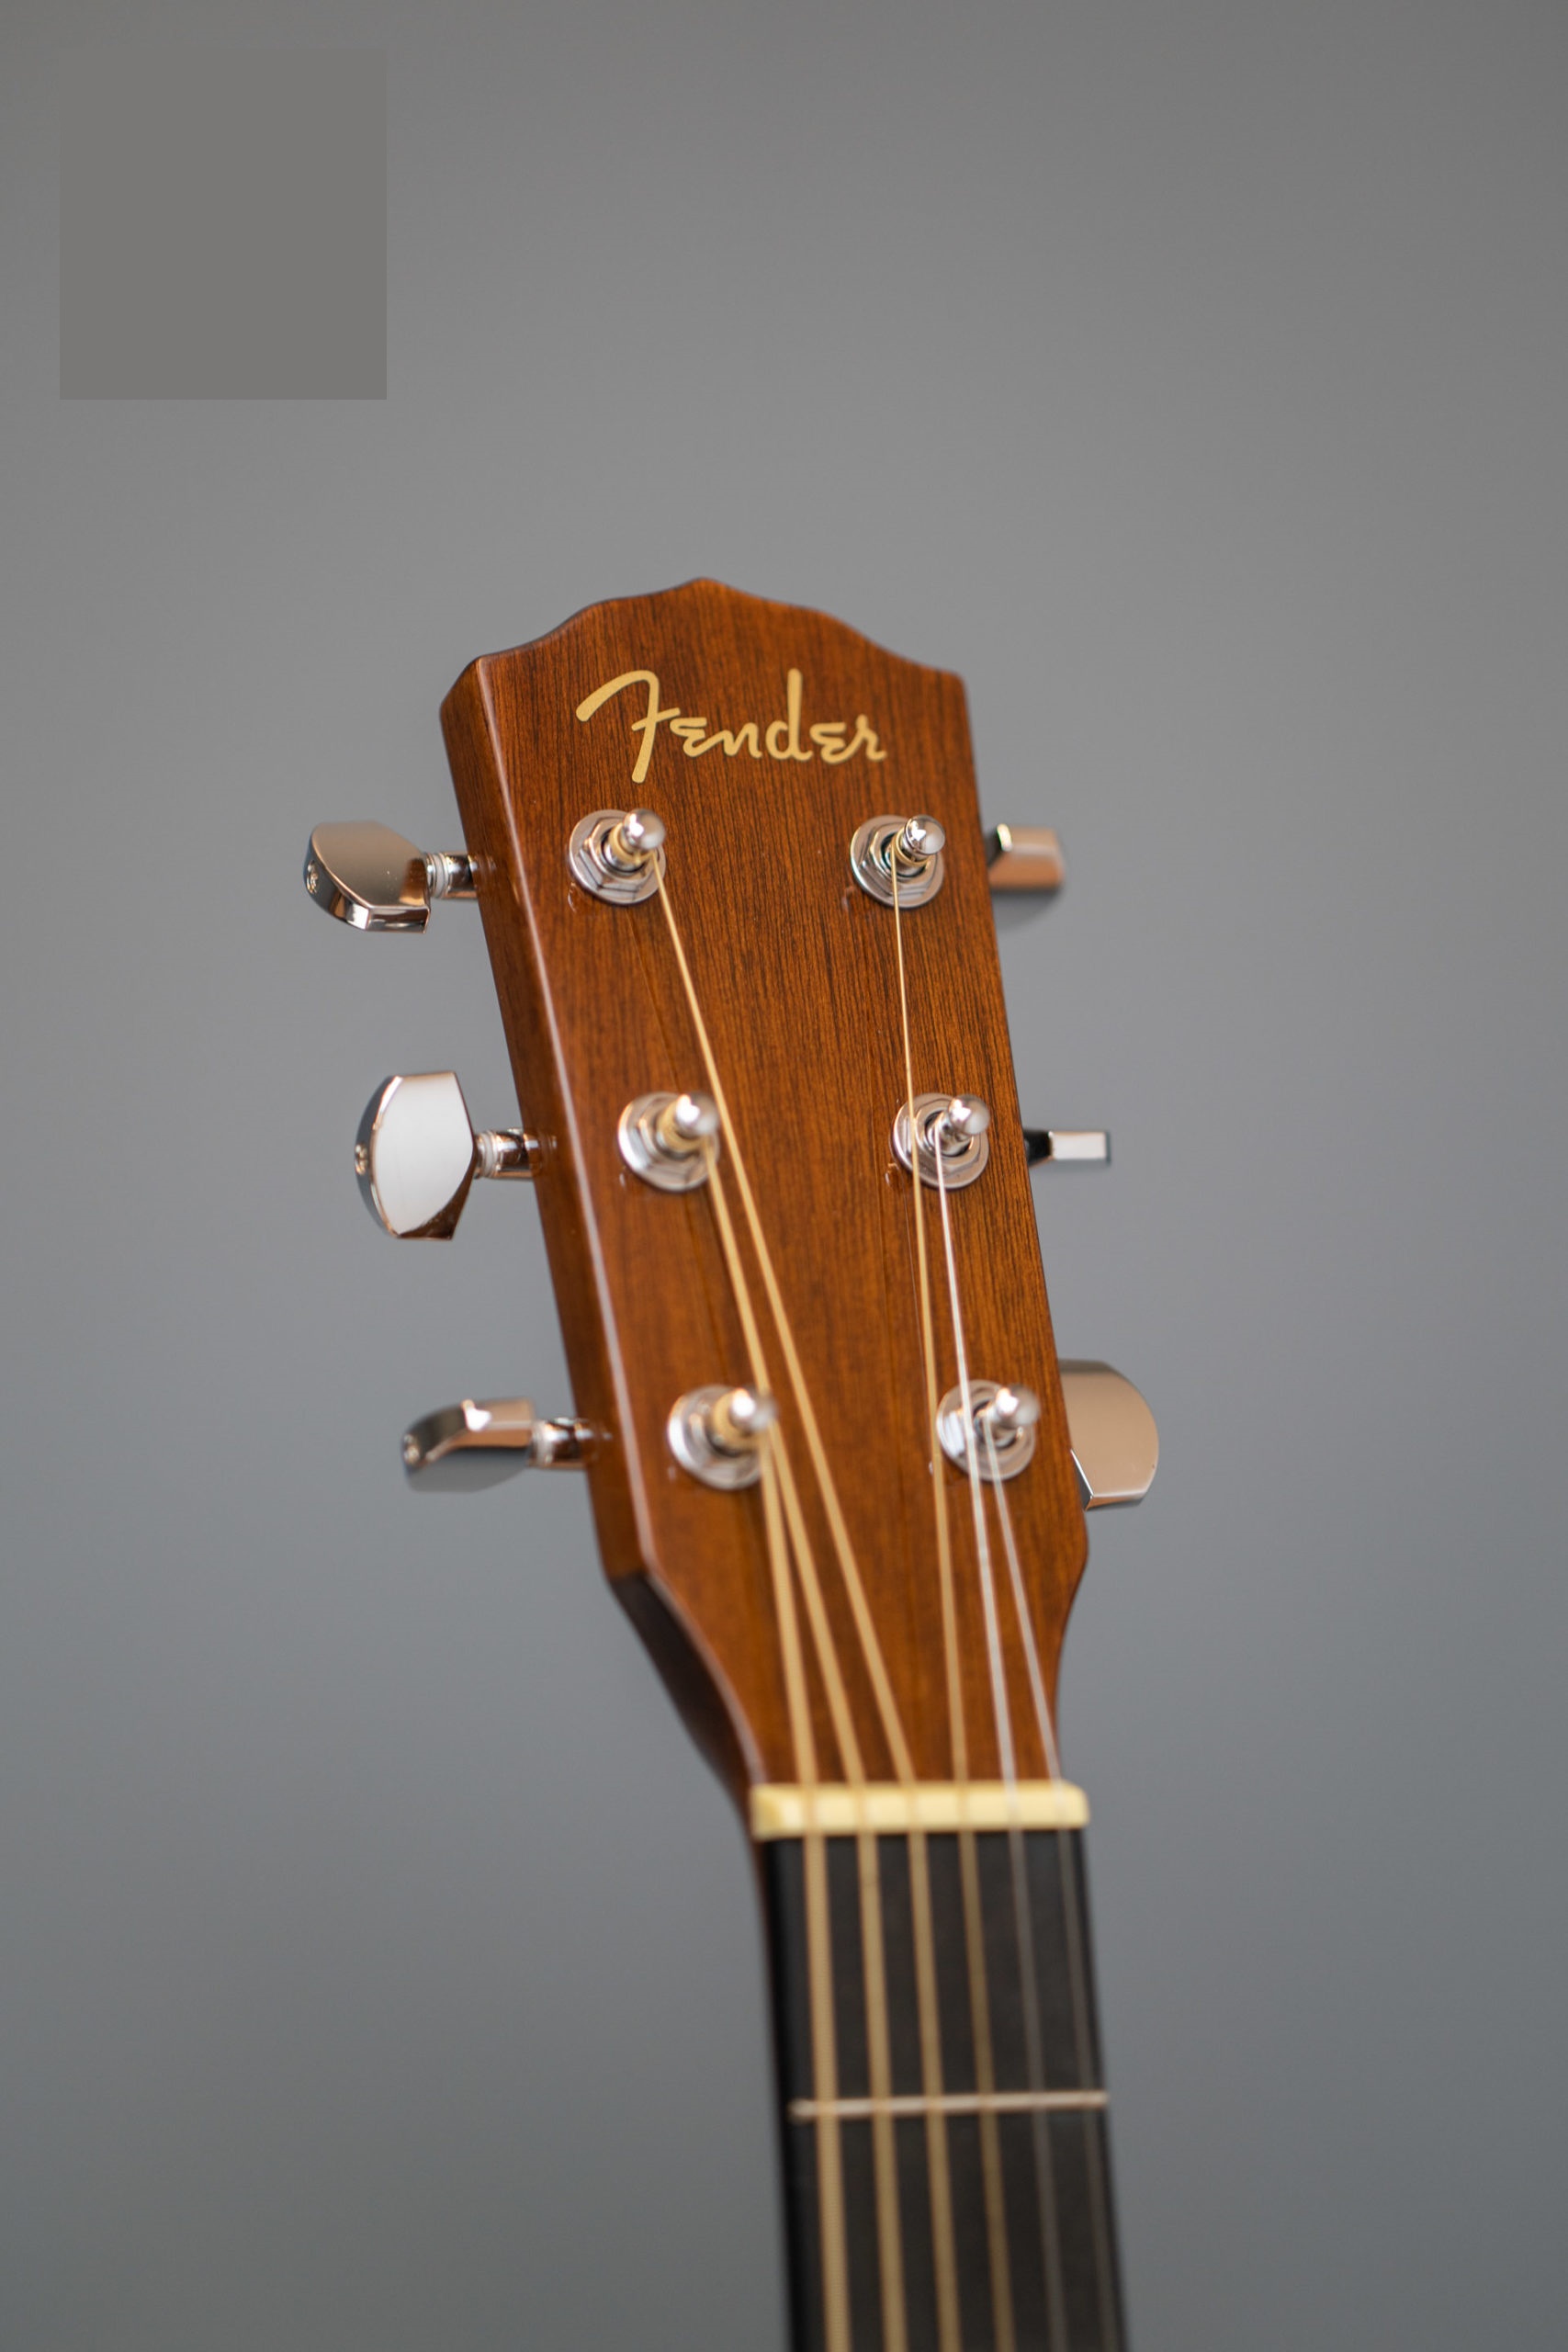 Fender CT-60S